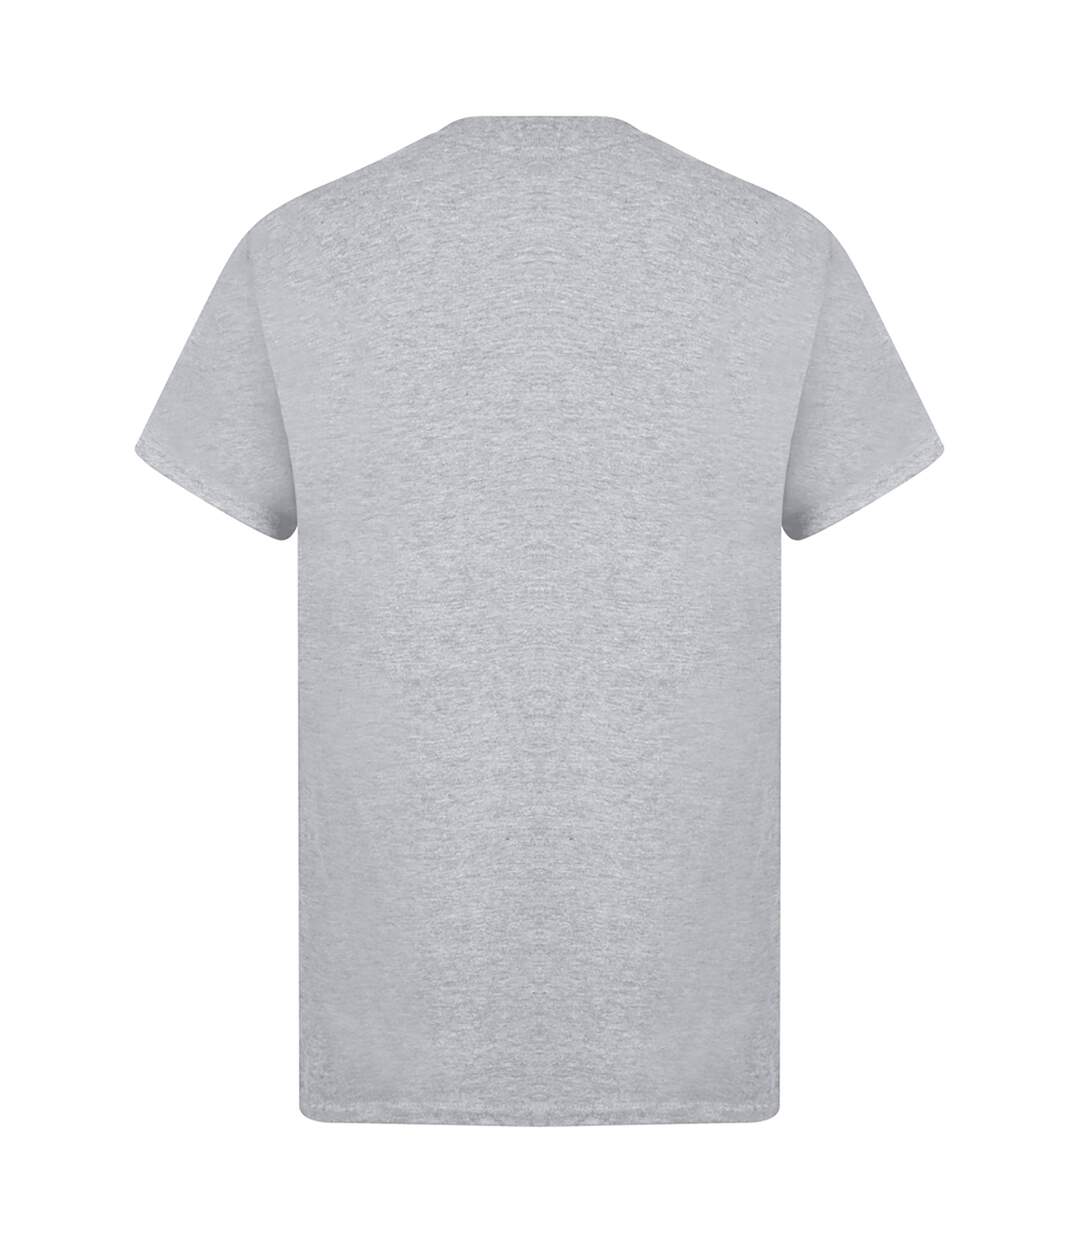 Casual Classics Tee-shirt Premium Ringspun pour hommes (Gris chiné) - UTAB263